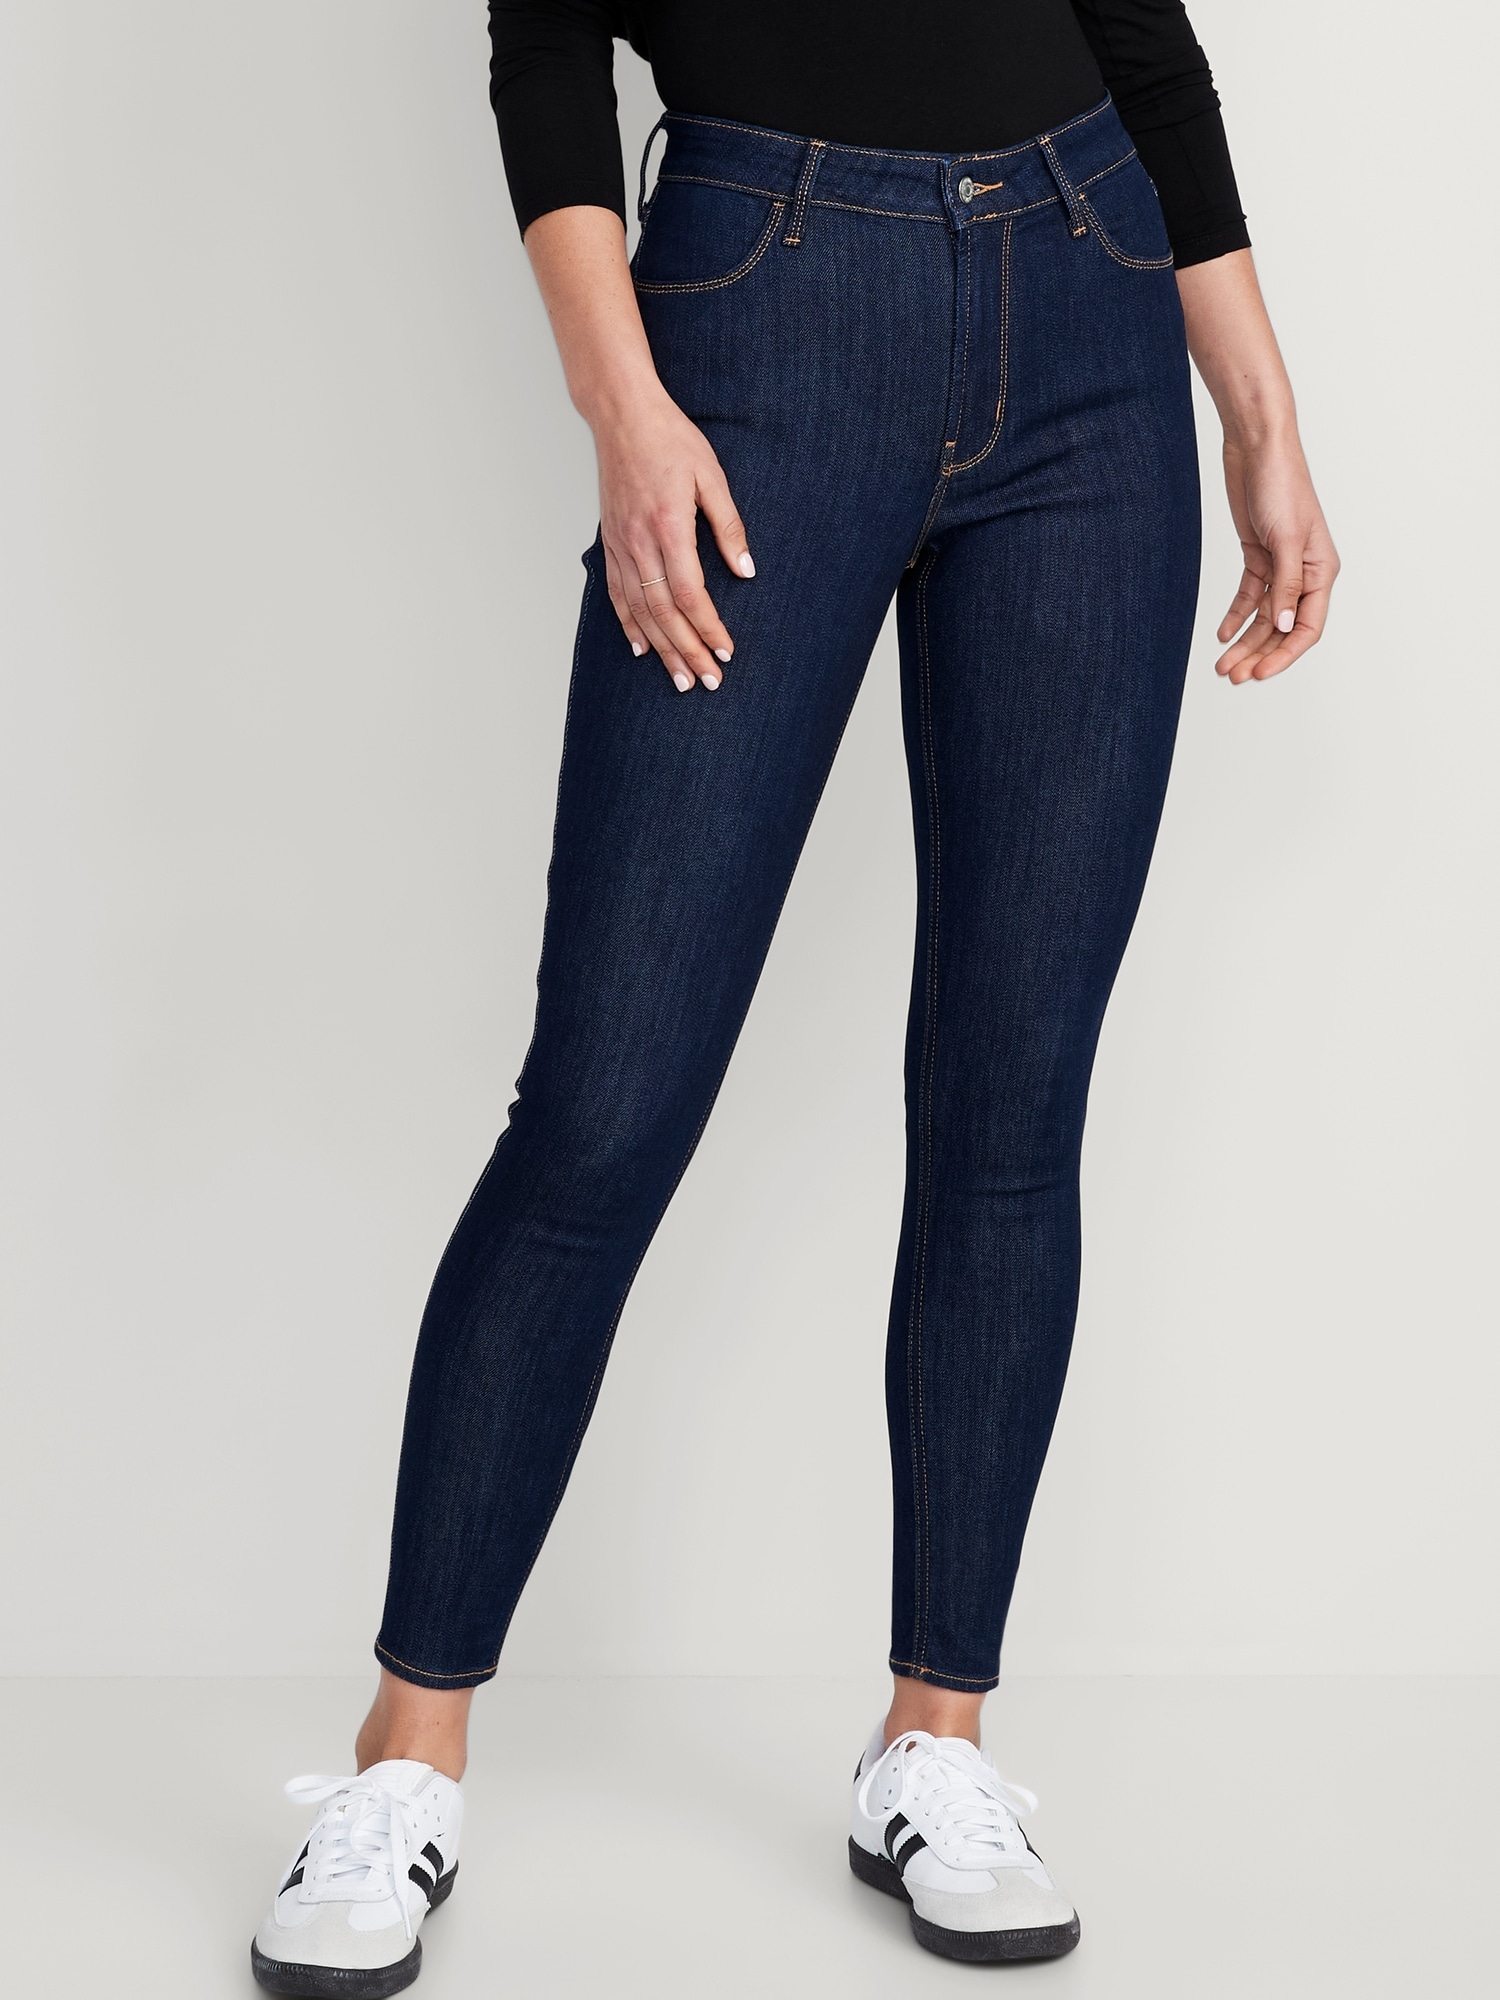 SEXY Black SKINNY Jeans SIZE 14 Womens DISTRESSED Hi Rise CURVY Stretch |  eBay